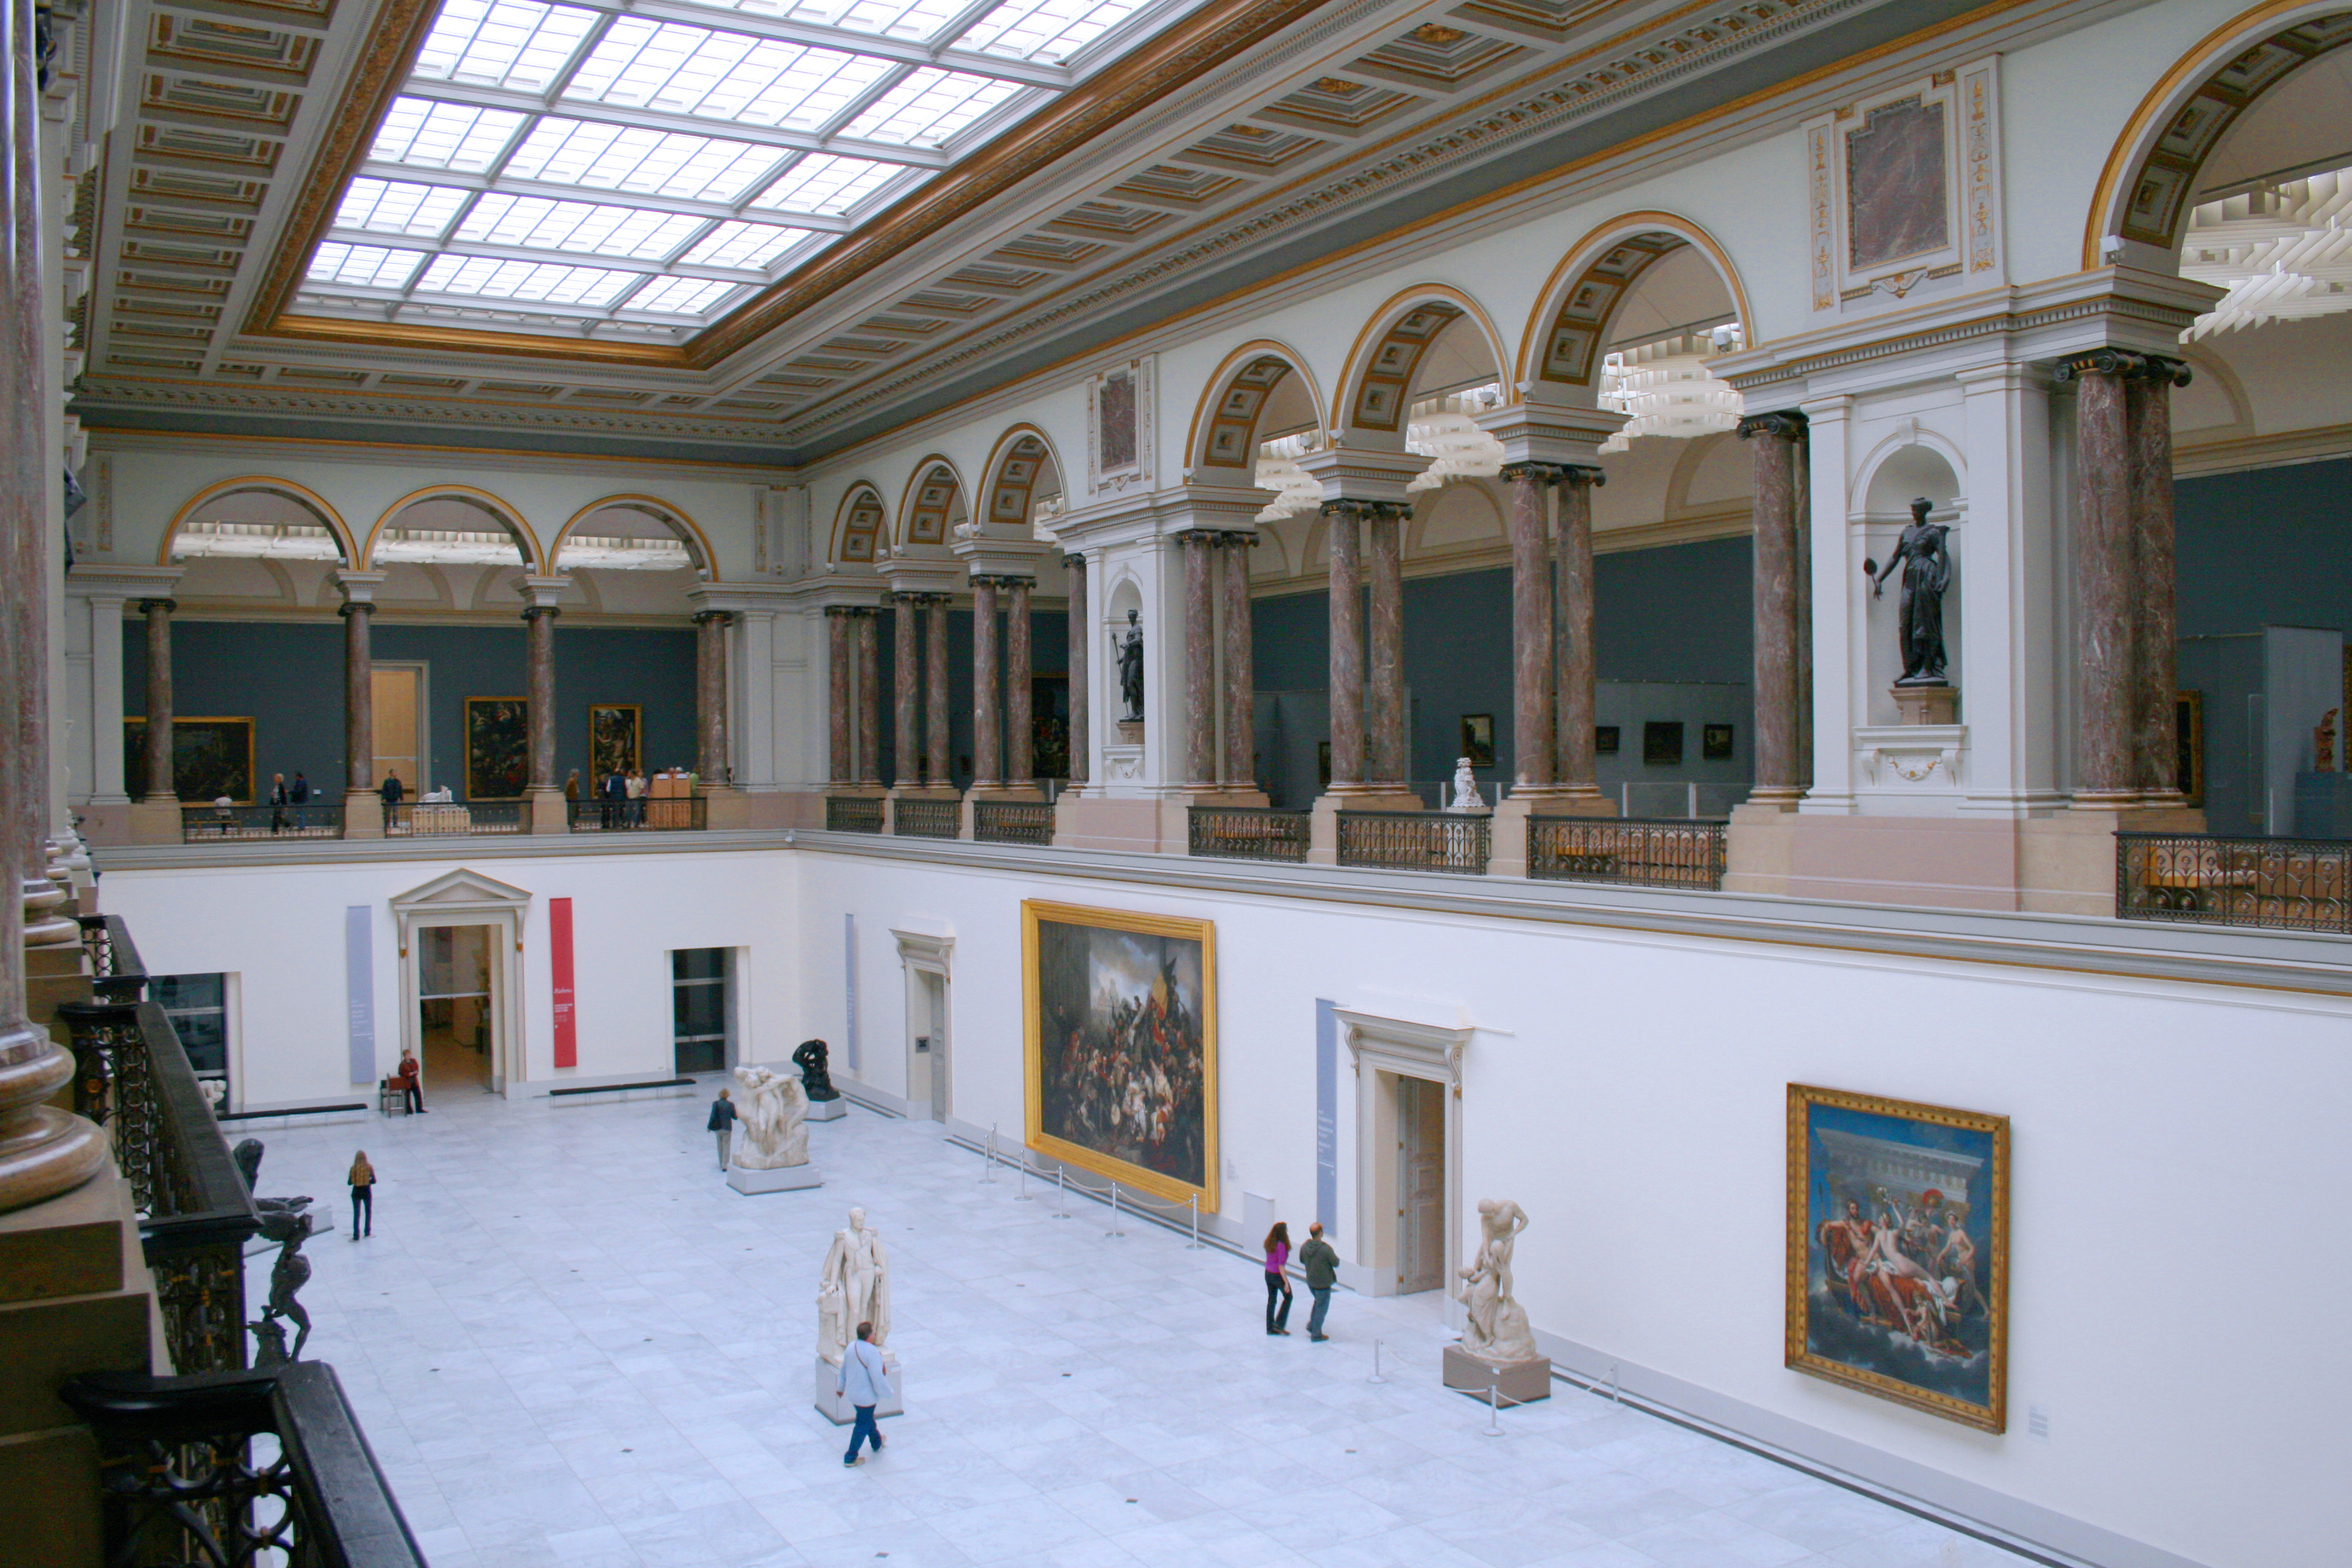 Bảo tàng Mỹ thuật Hoàng gia Bỉ - Royal Museums of Fine Arts of Belgium |  Yeudulich